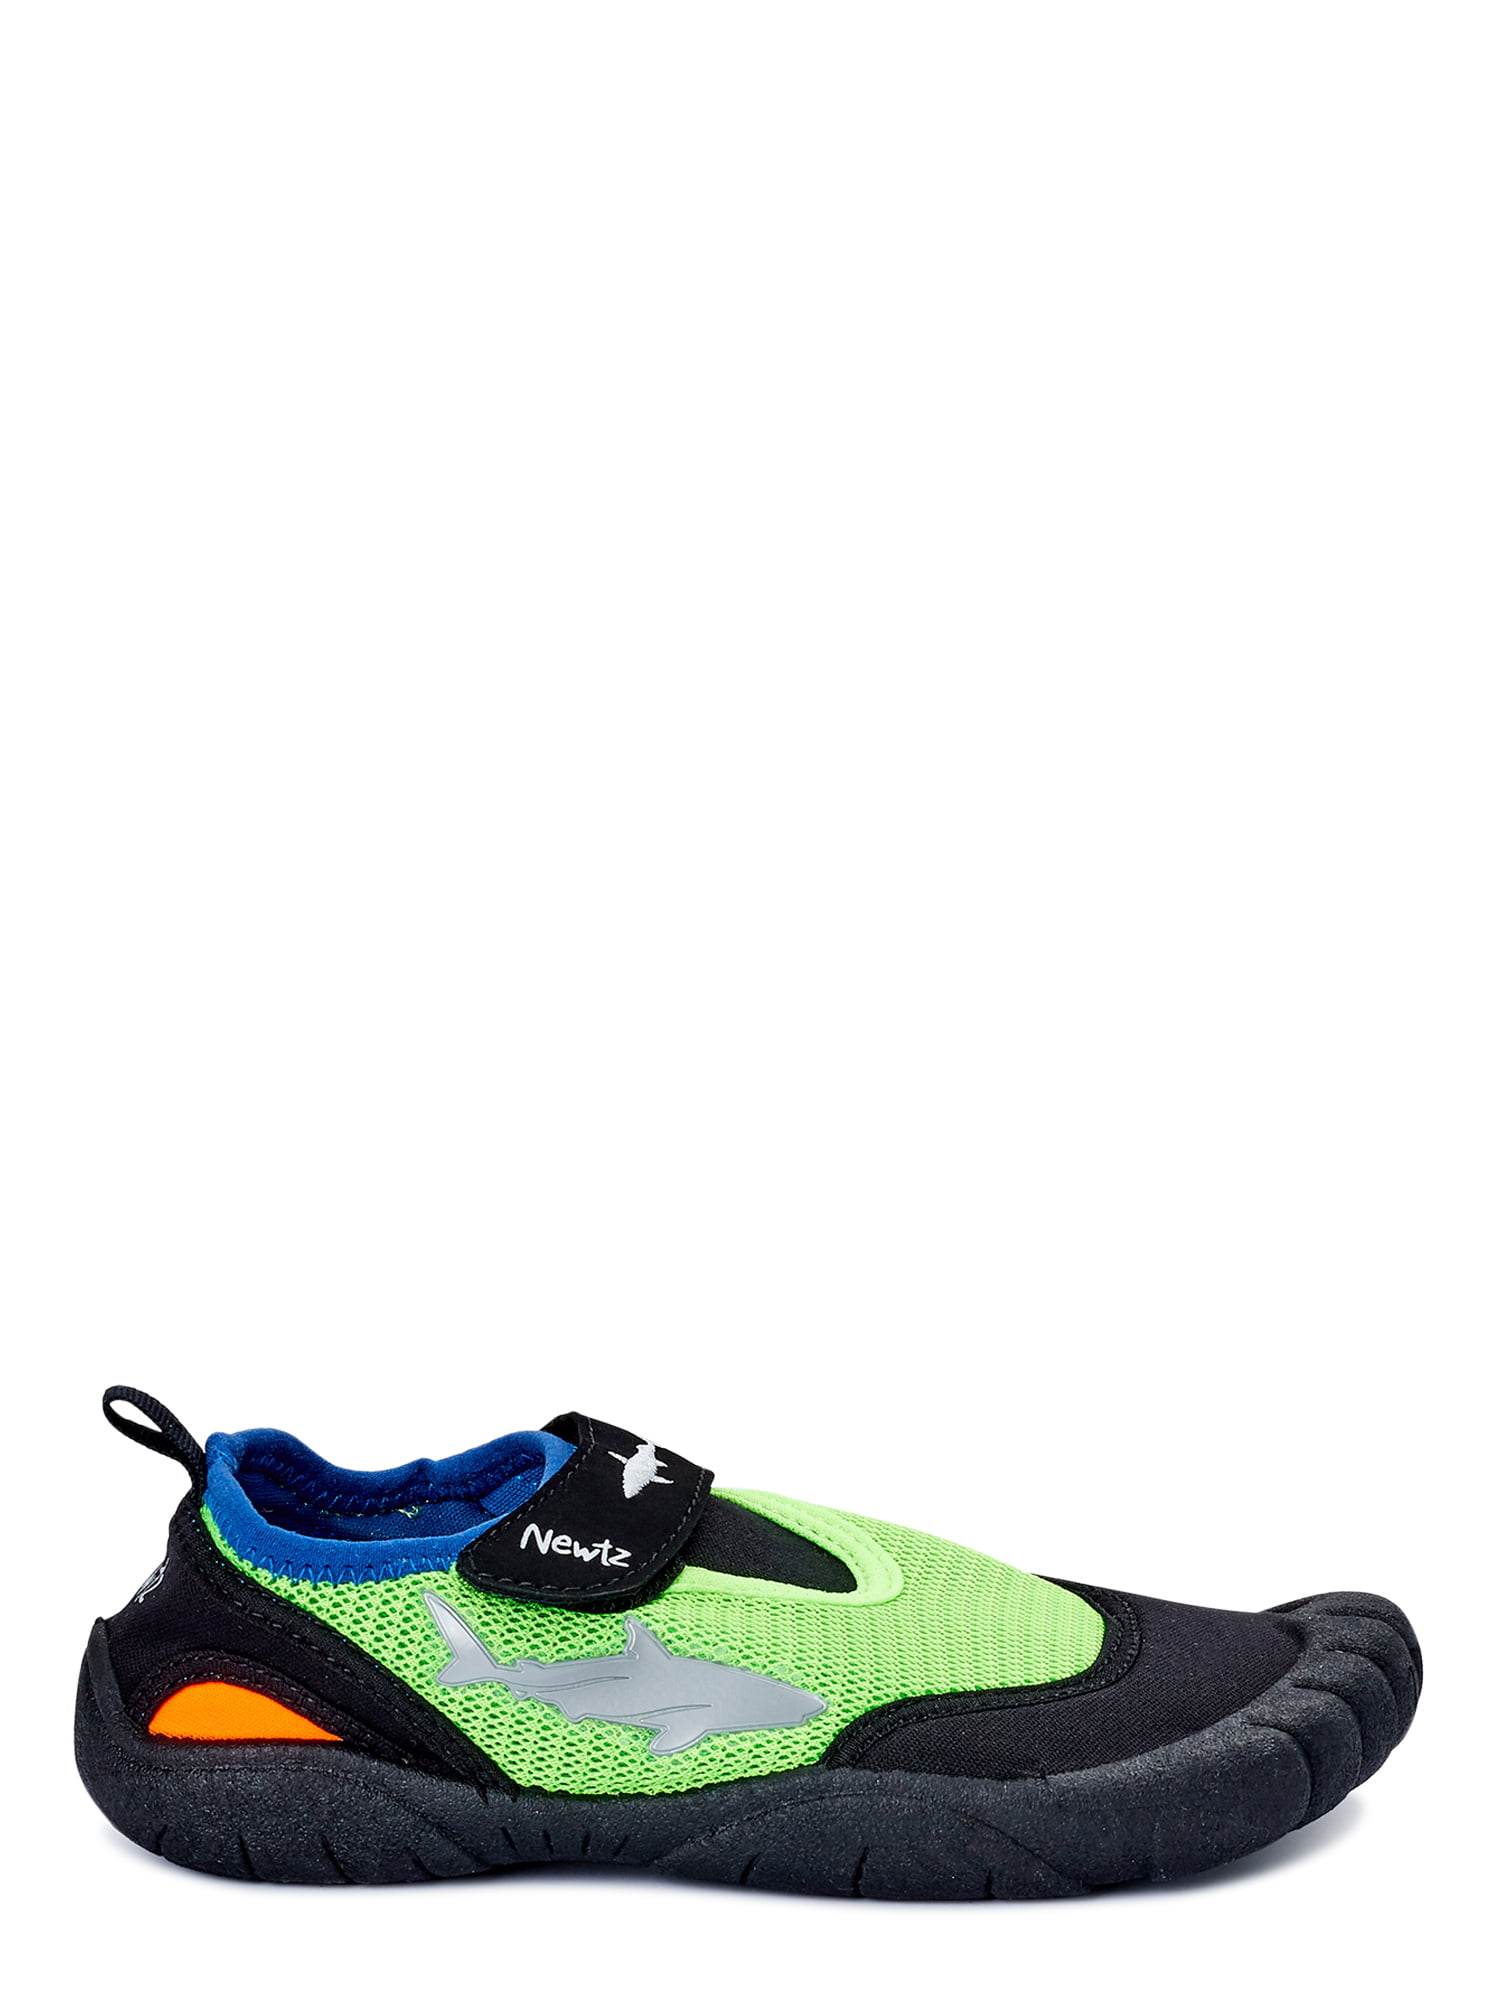 NEW Radicool Water Shoes Boy's Black Blue Size M 2 Swim Camping Summer 